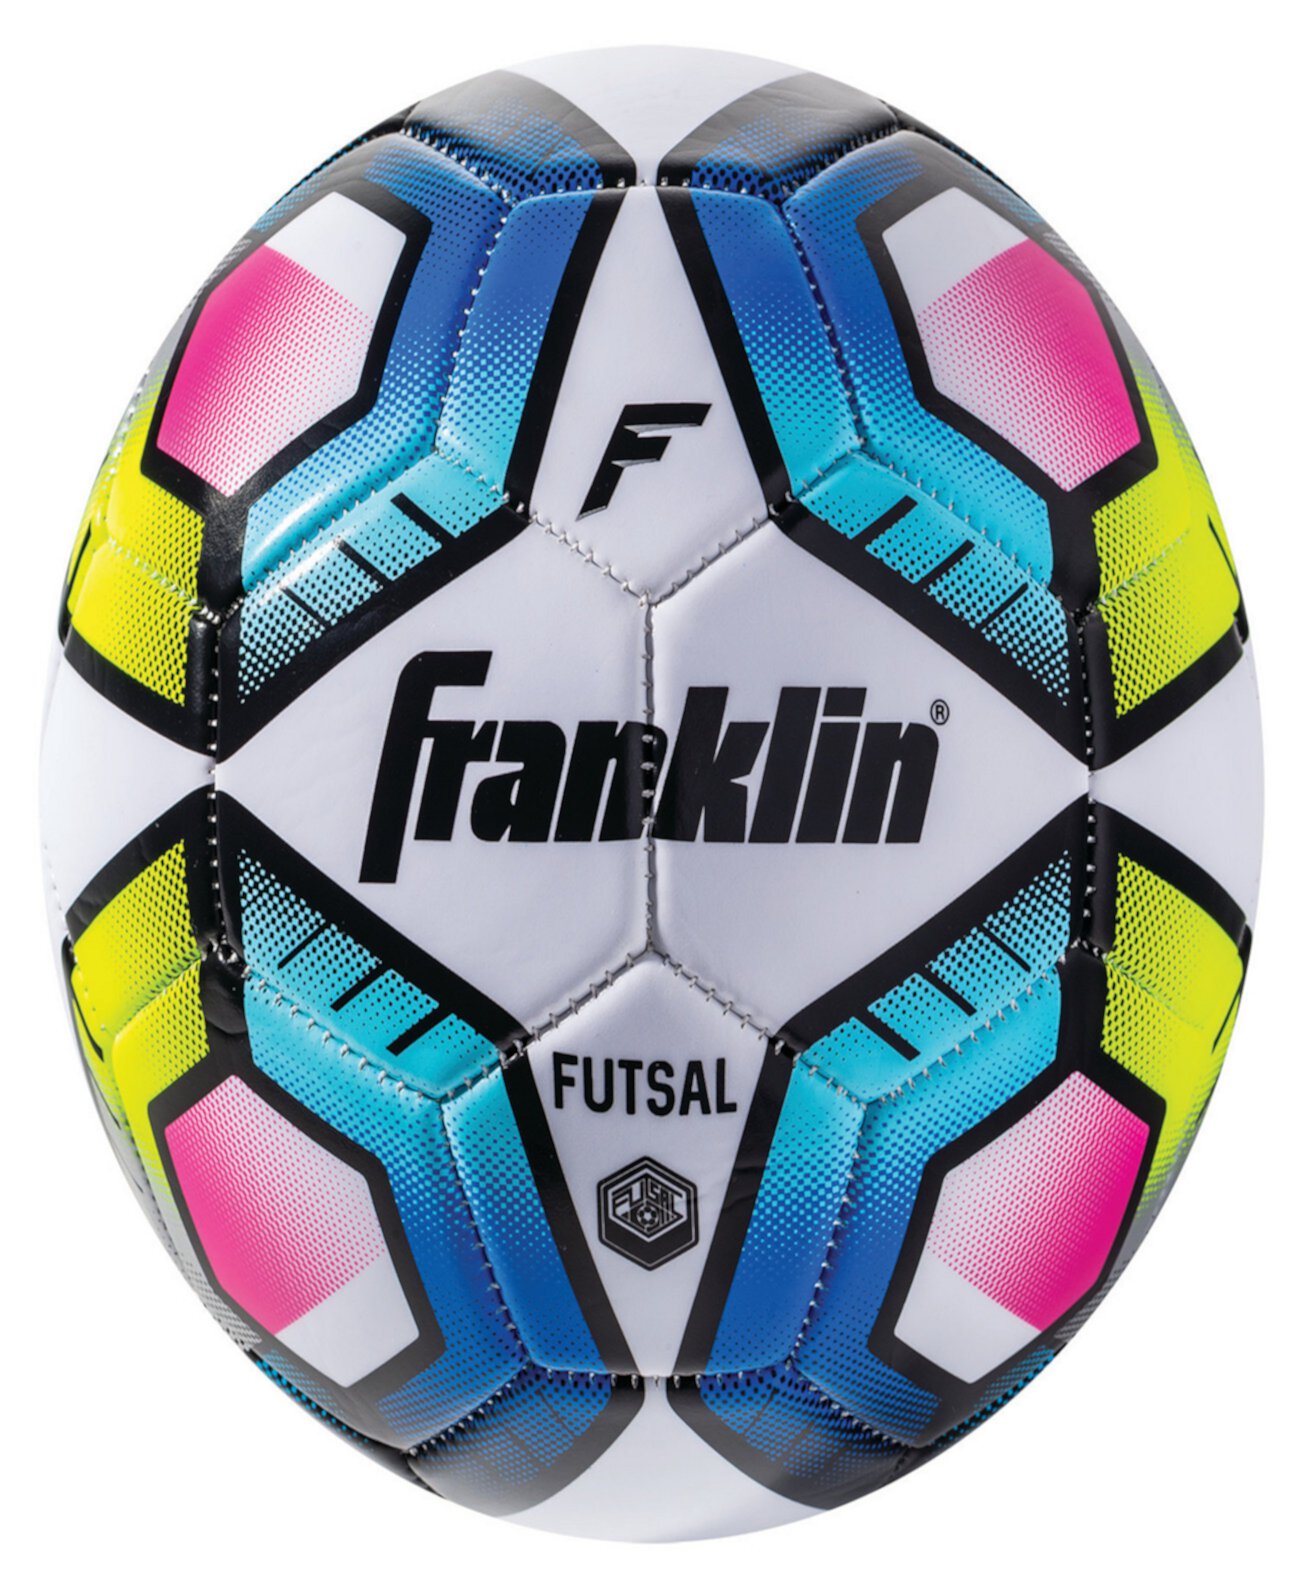 Официальный футзальный мяч, размер 3 Franklin Sports